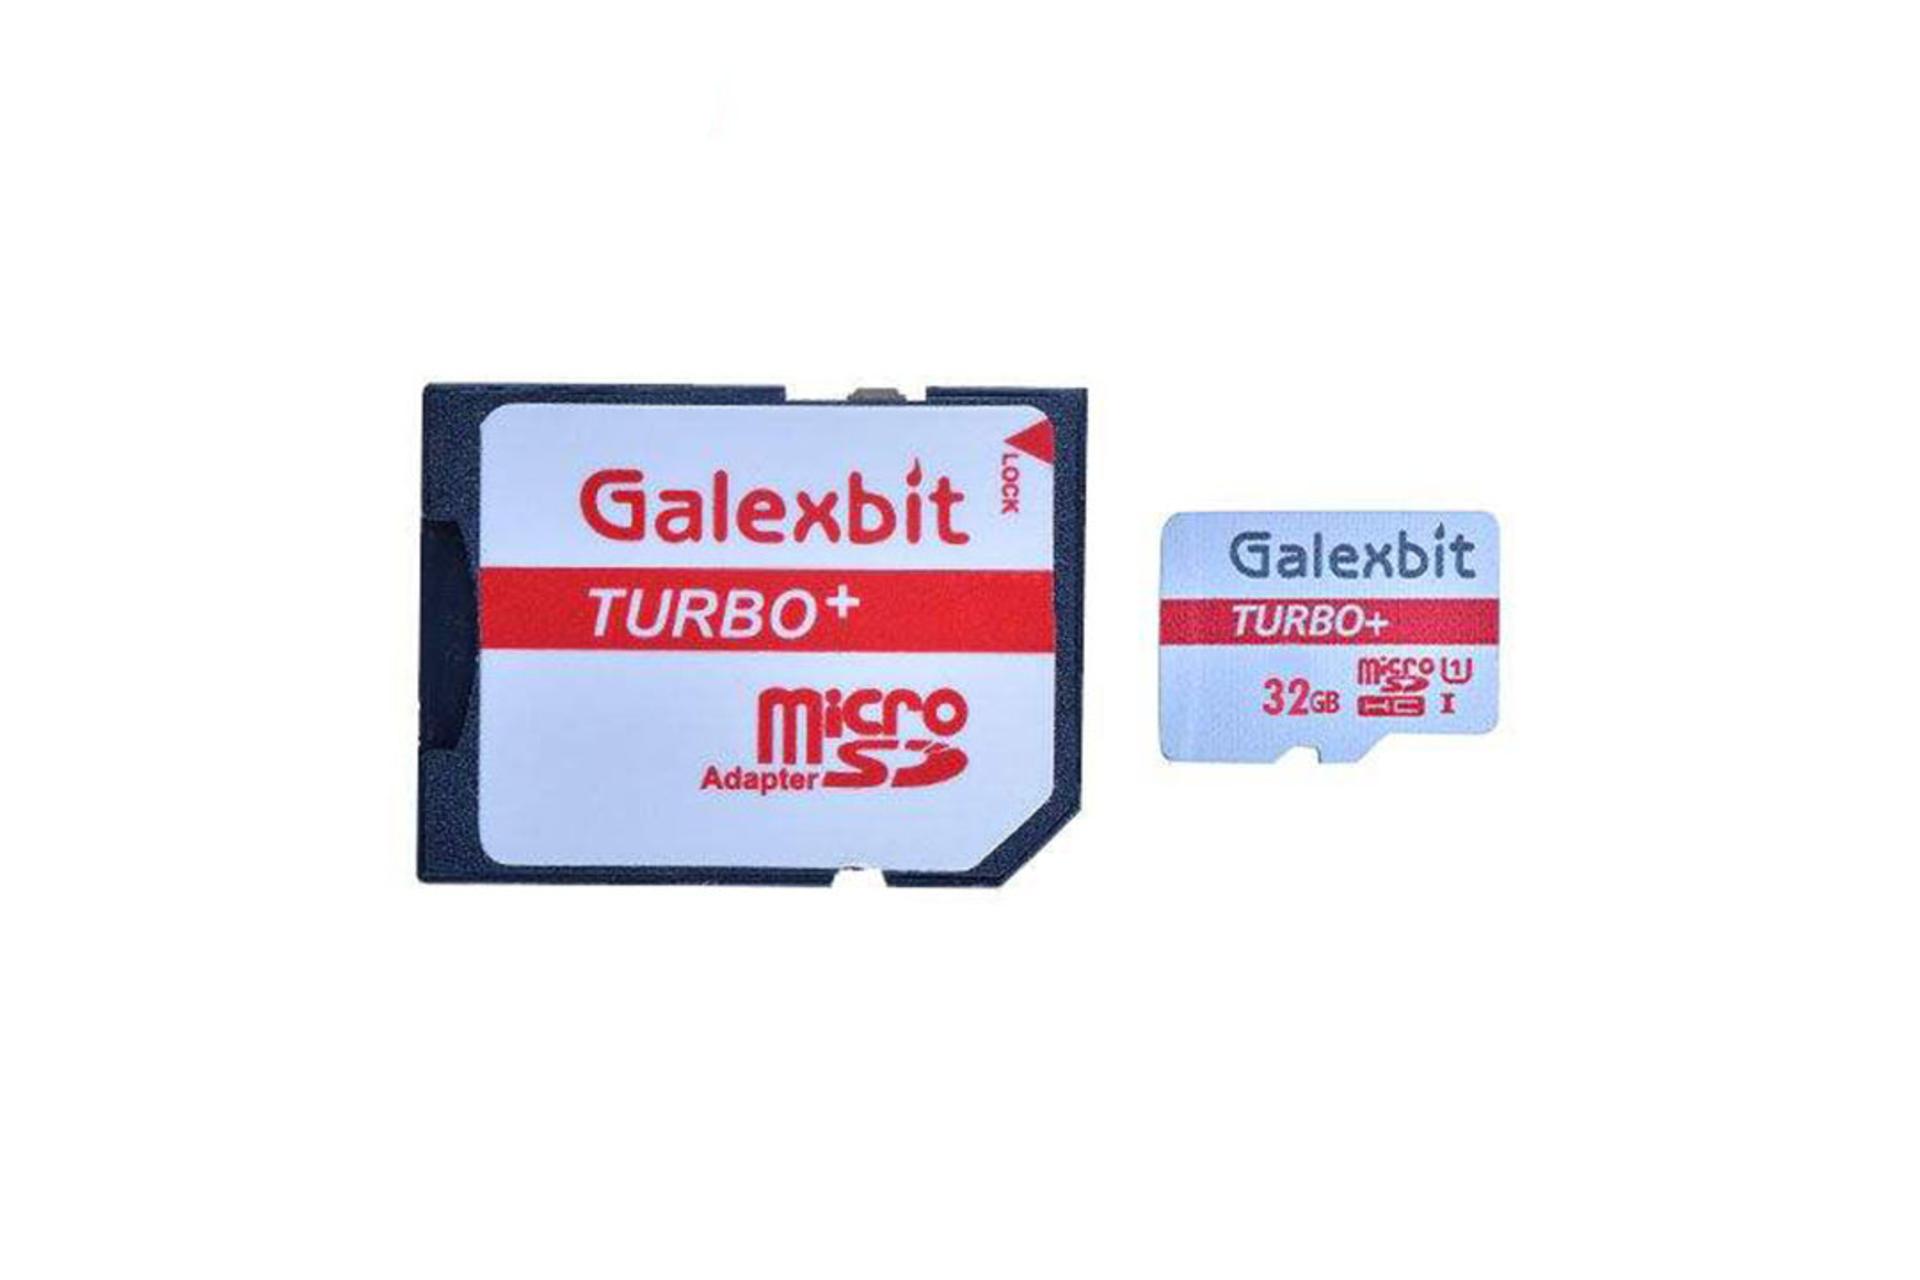 Galexbit Turbo+ microSDHC Class 10 UHS-I U1 32GB